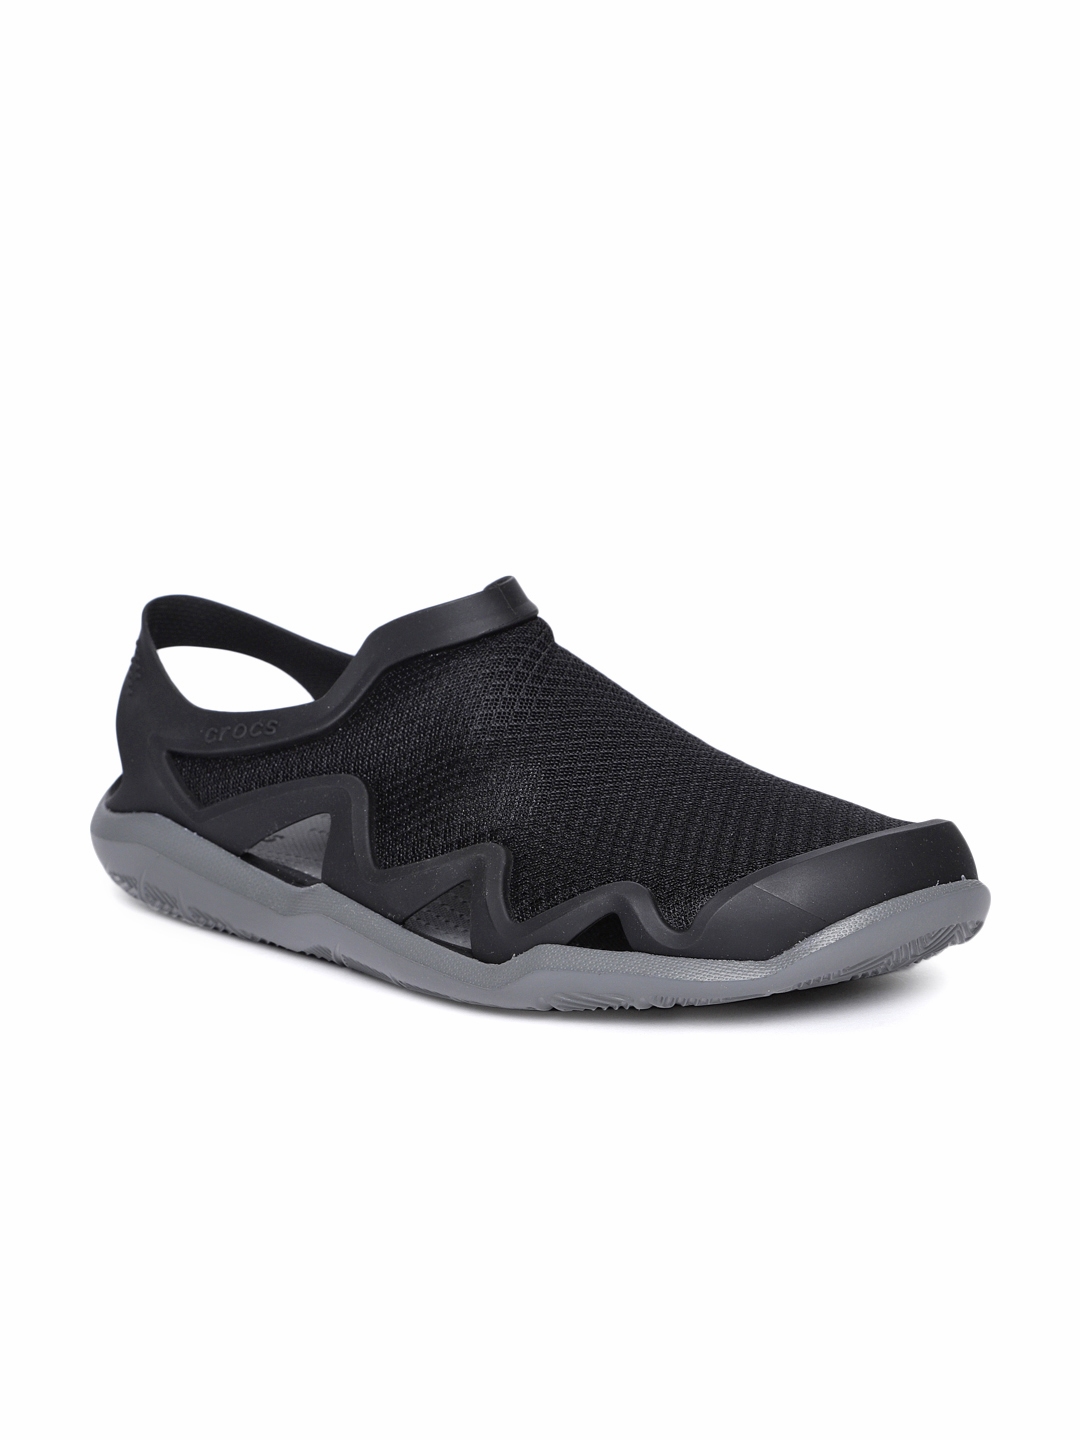 Buy Crocs Men Black Swiftwater Shoe Style Sandals - Sandals for Men ...